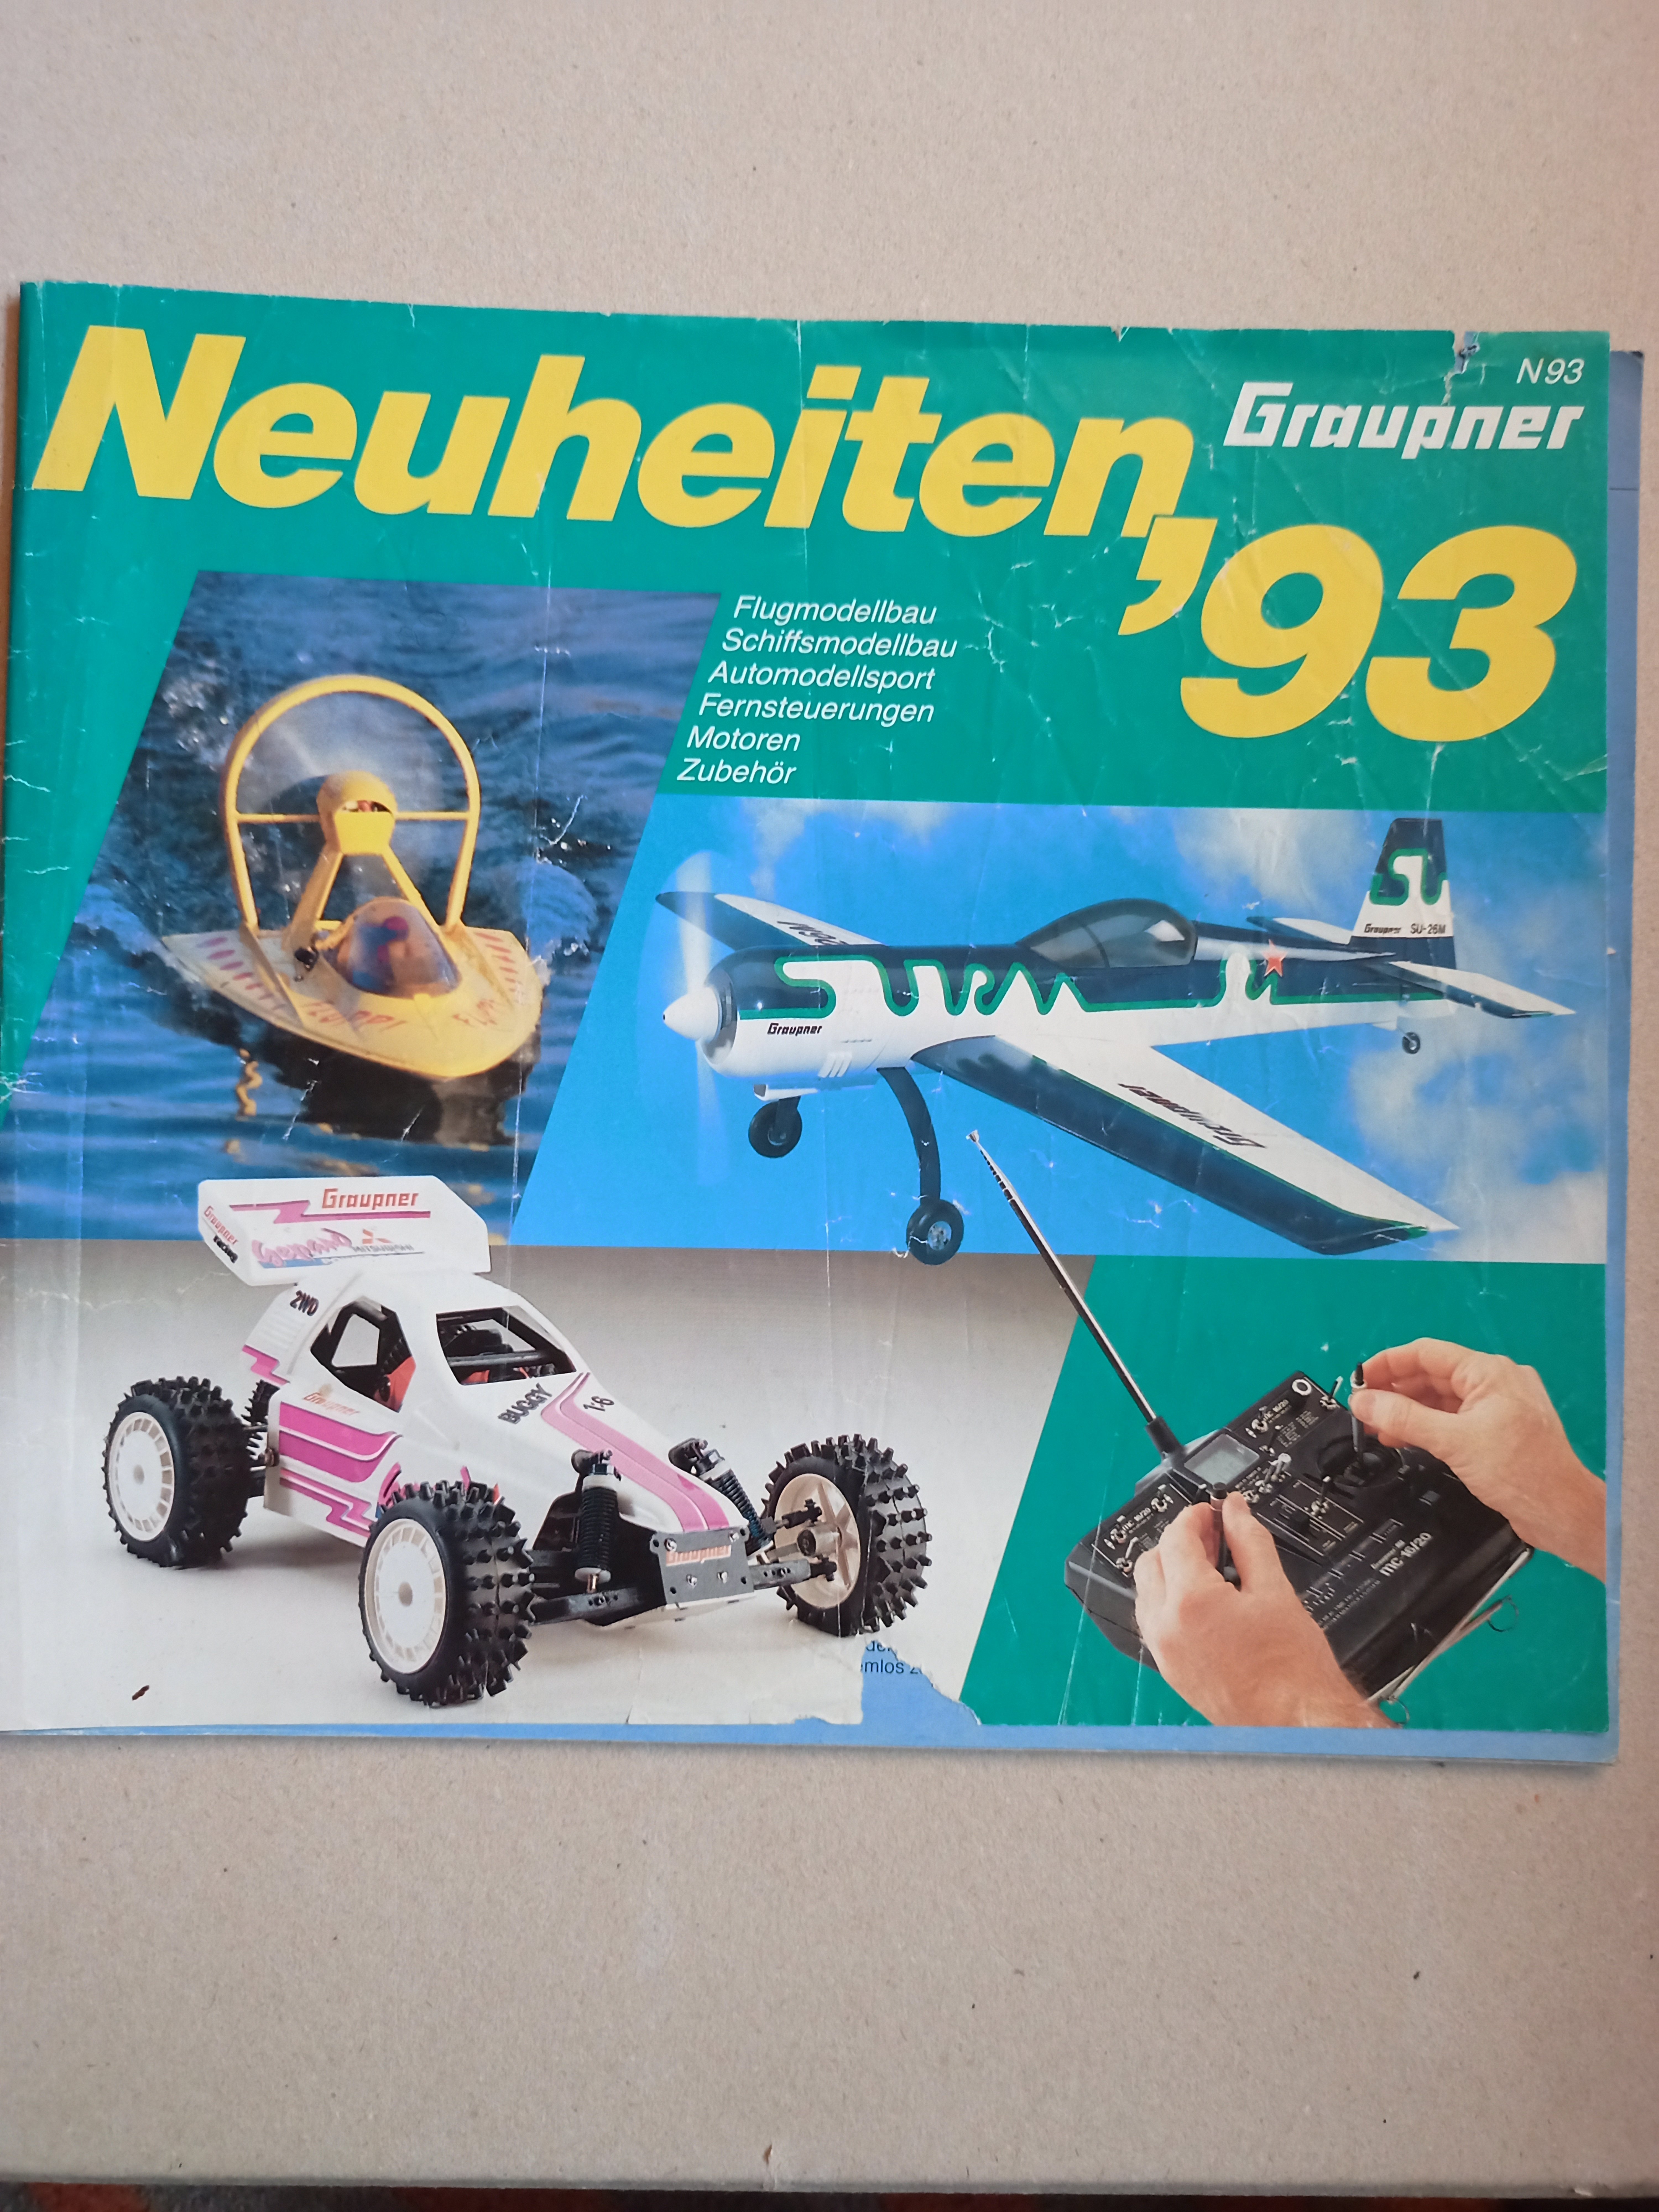 Graupner Neuheiten 1993 (Deutsches Segelflugmuseum mit Modellflug CC BY-NC-SA)